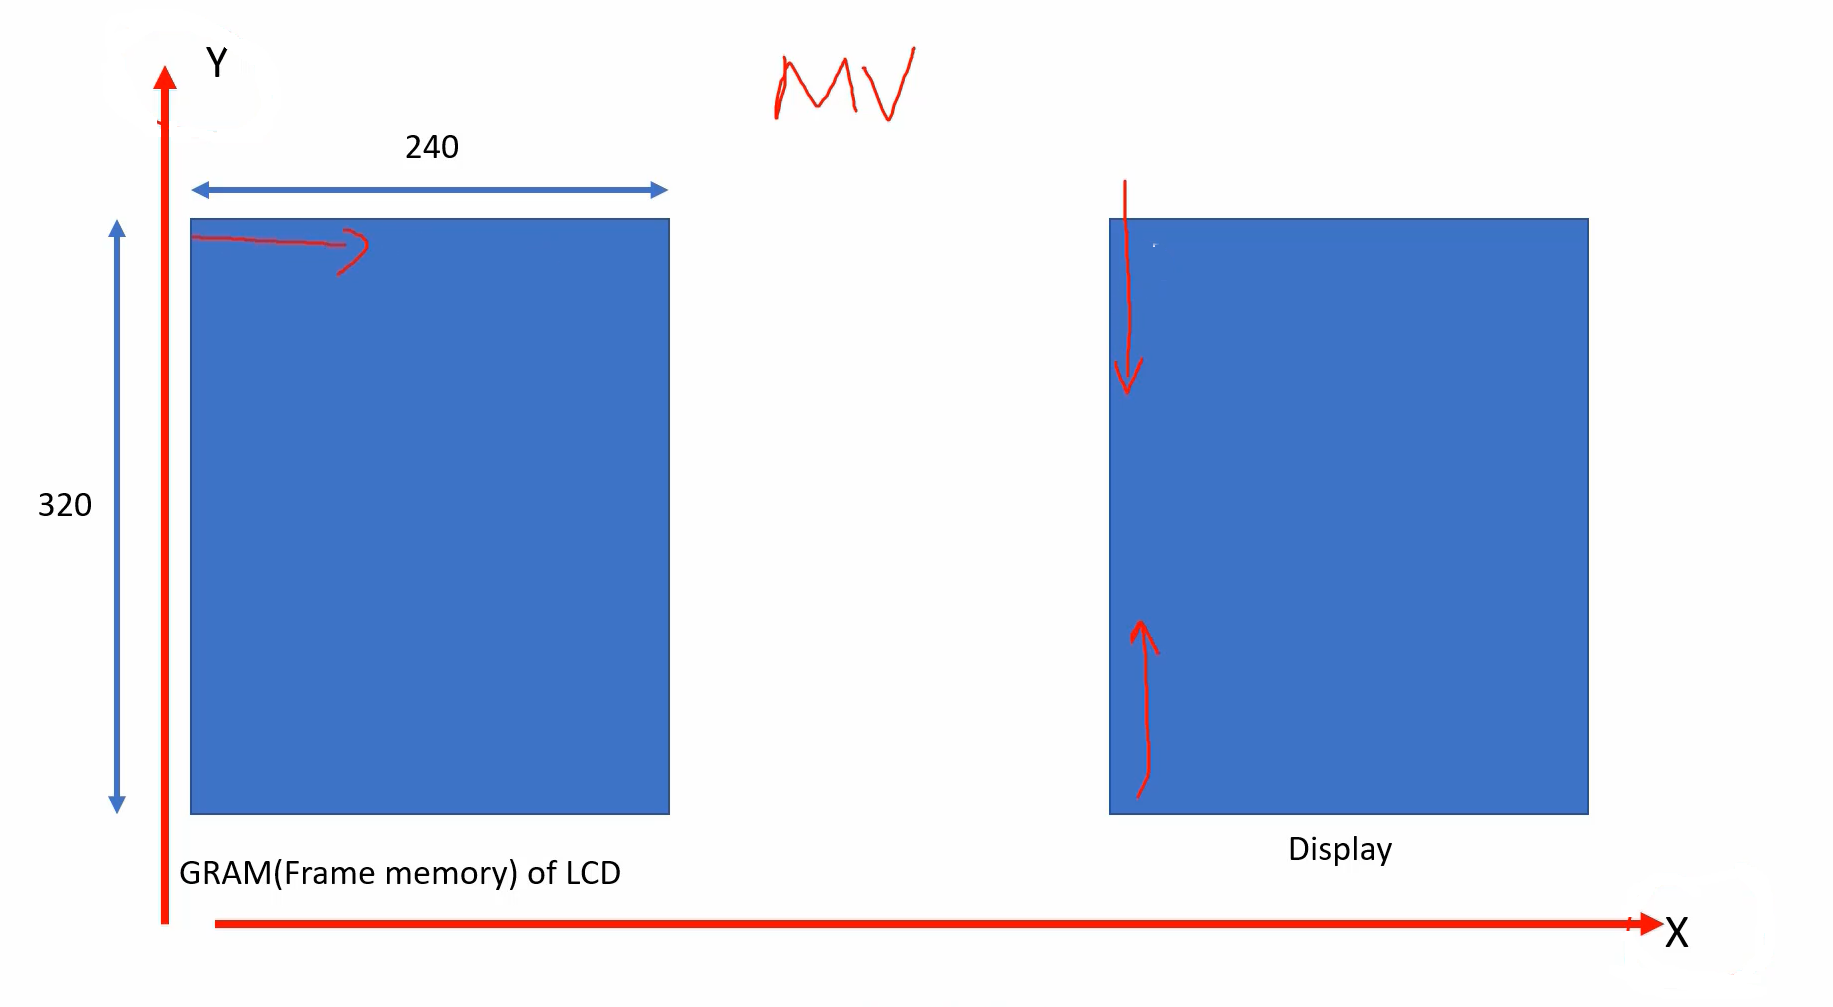 Figure 5. Memory access control in Landscape mode